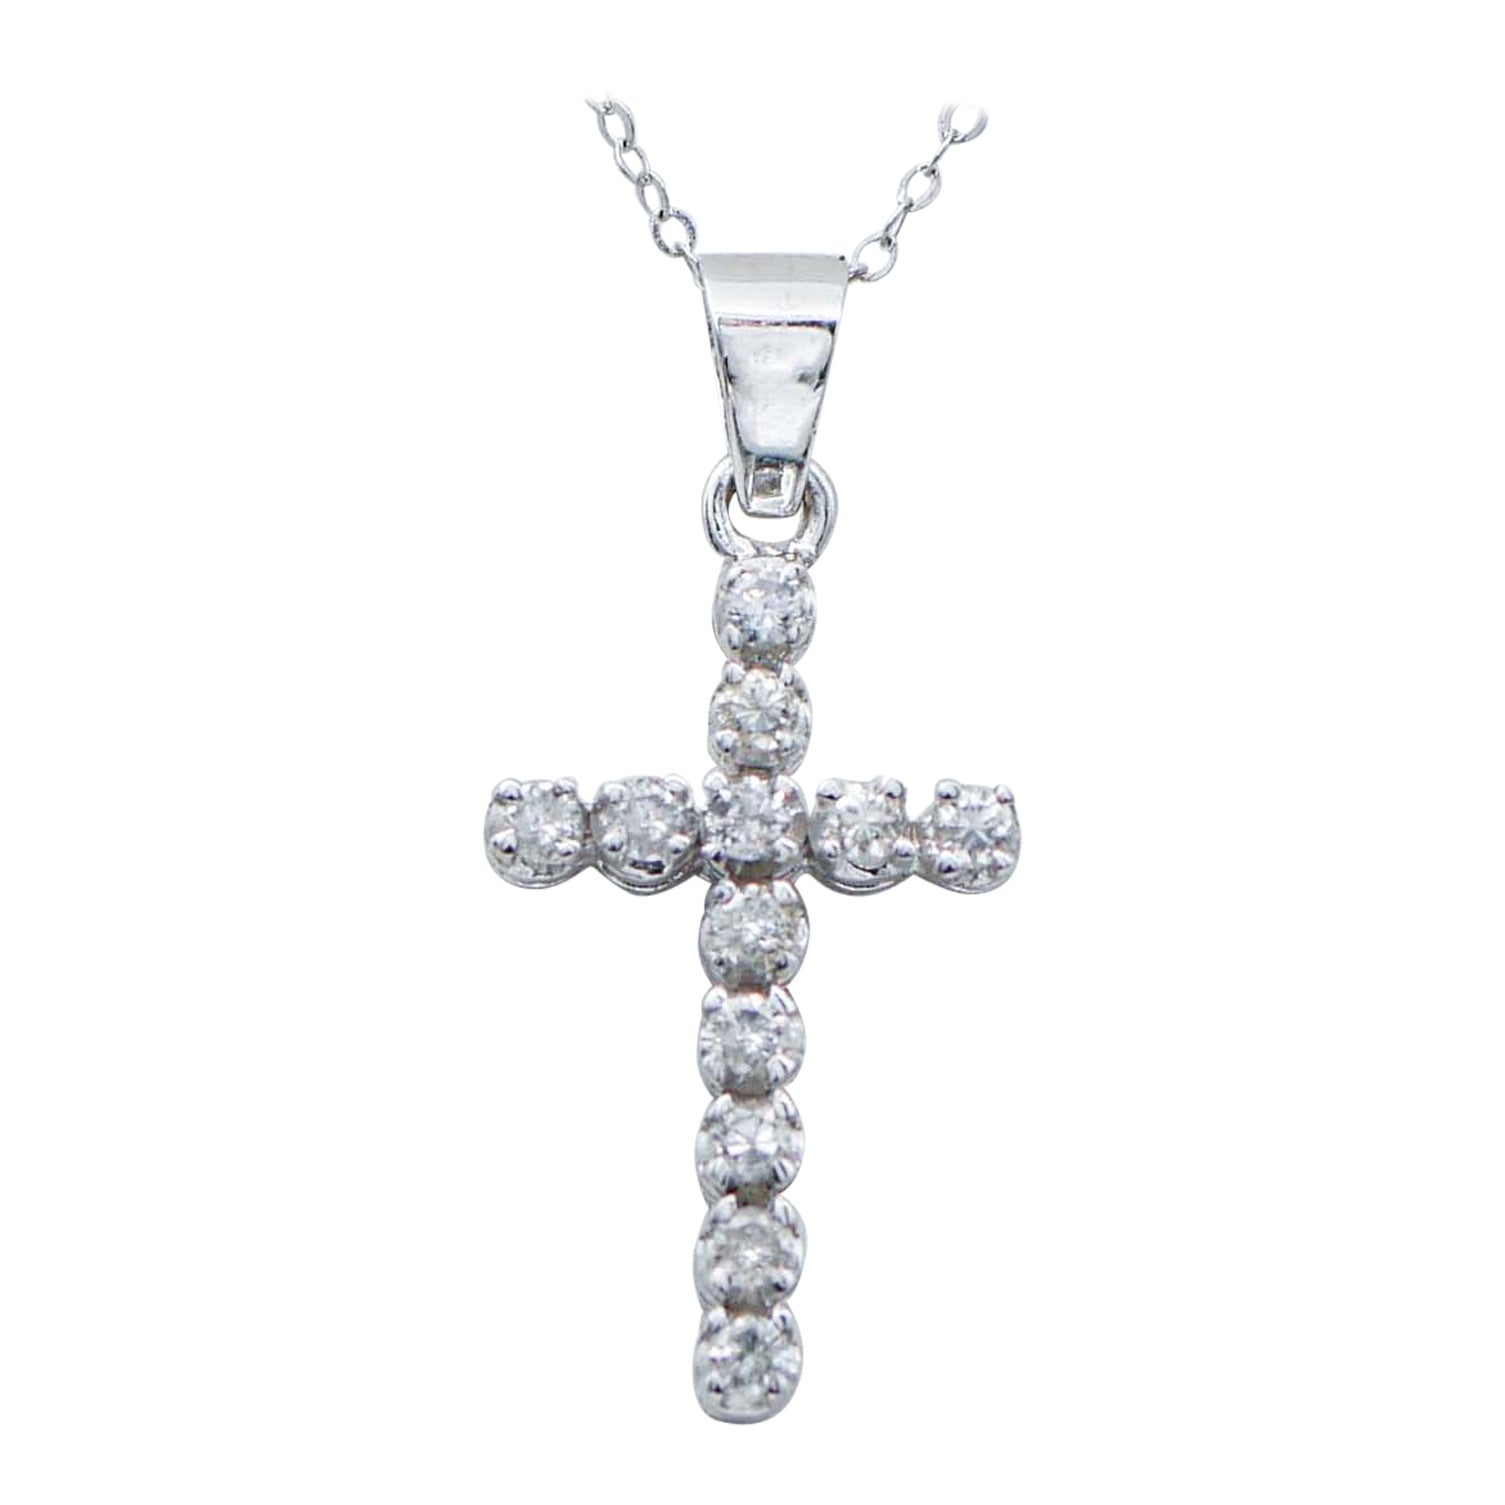 0.42 Carats Diamonds, White Gold Cross Pendant Necklace. For Sale